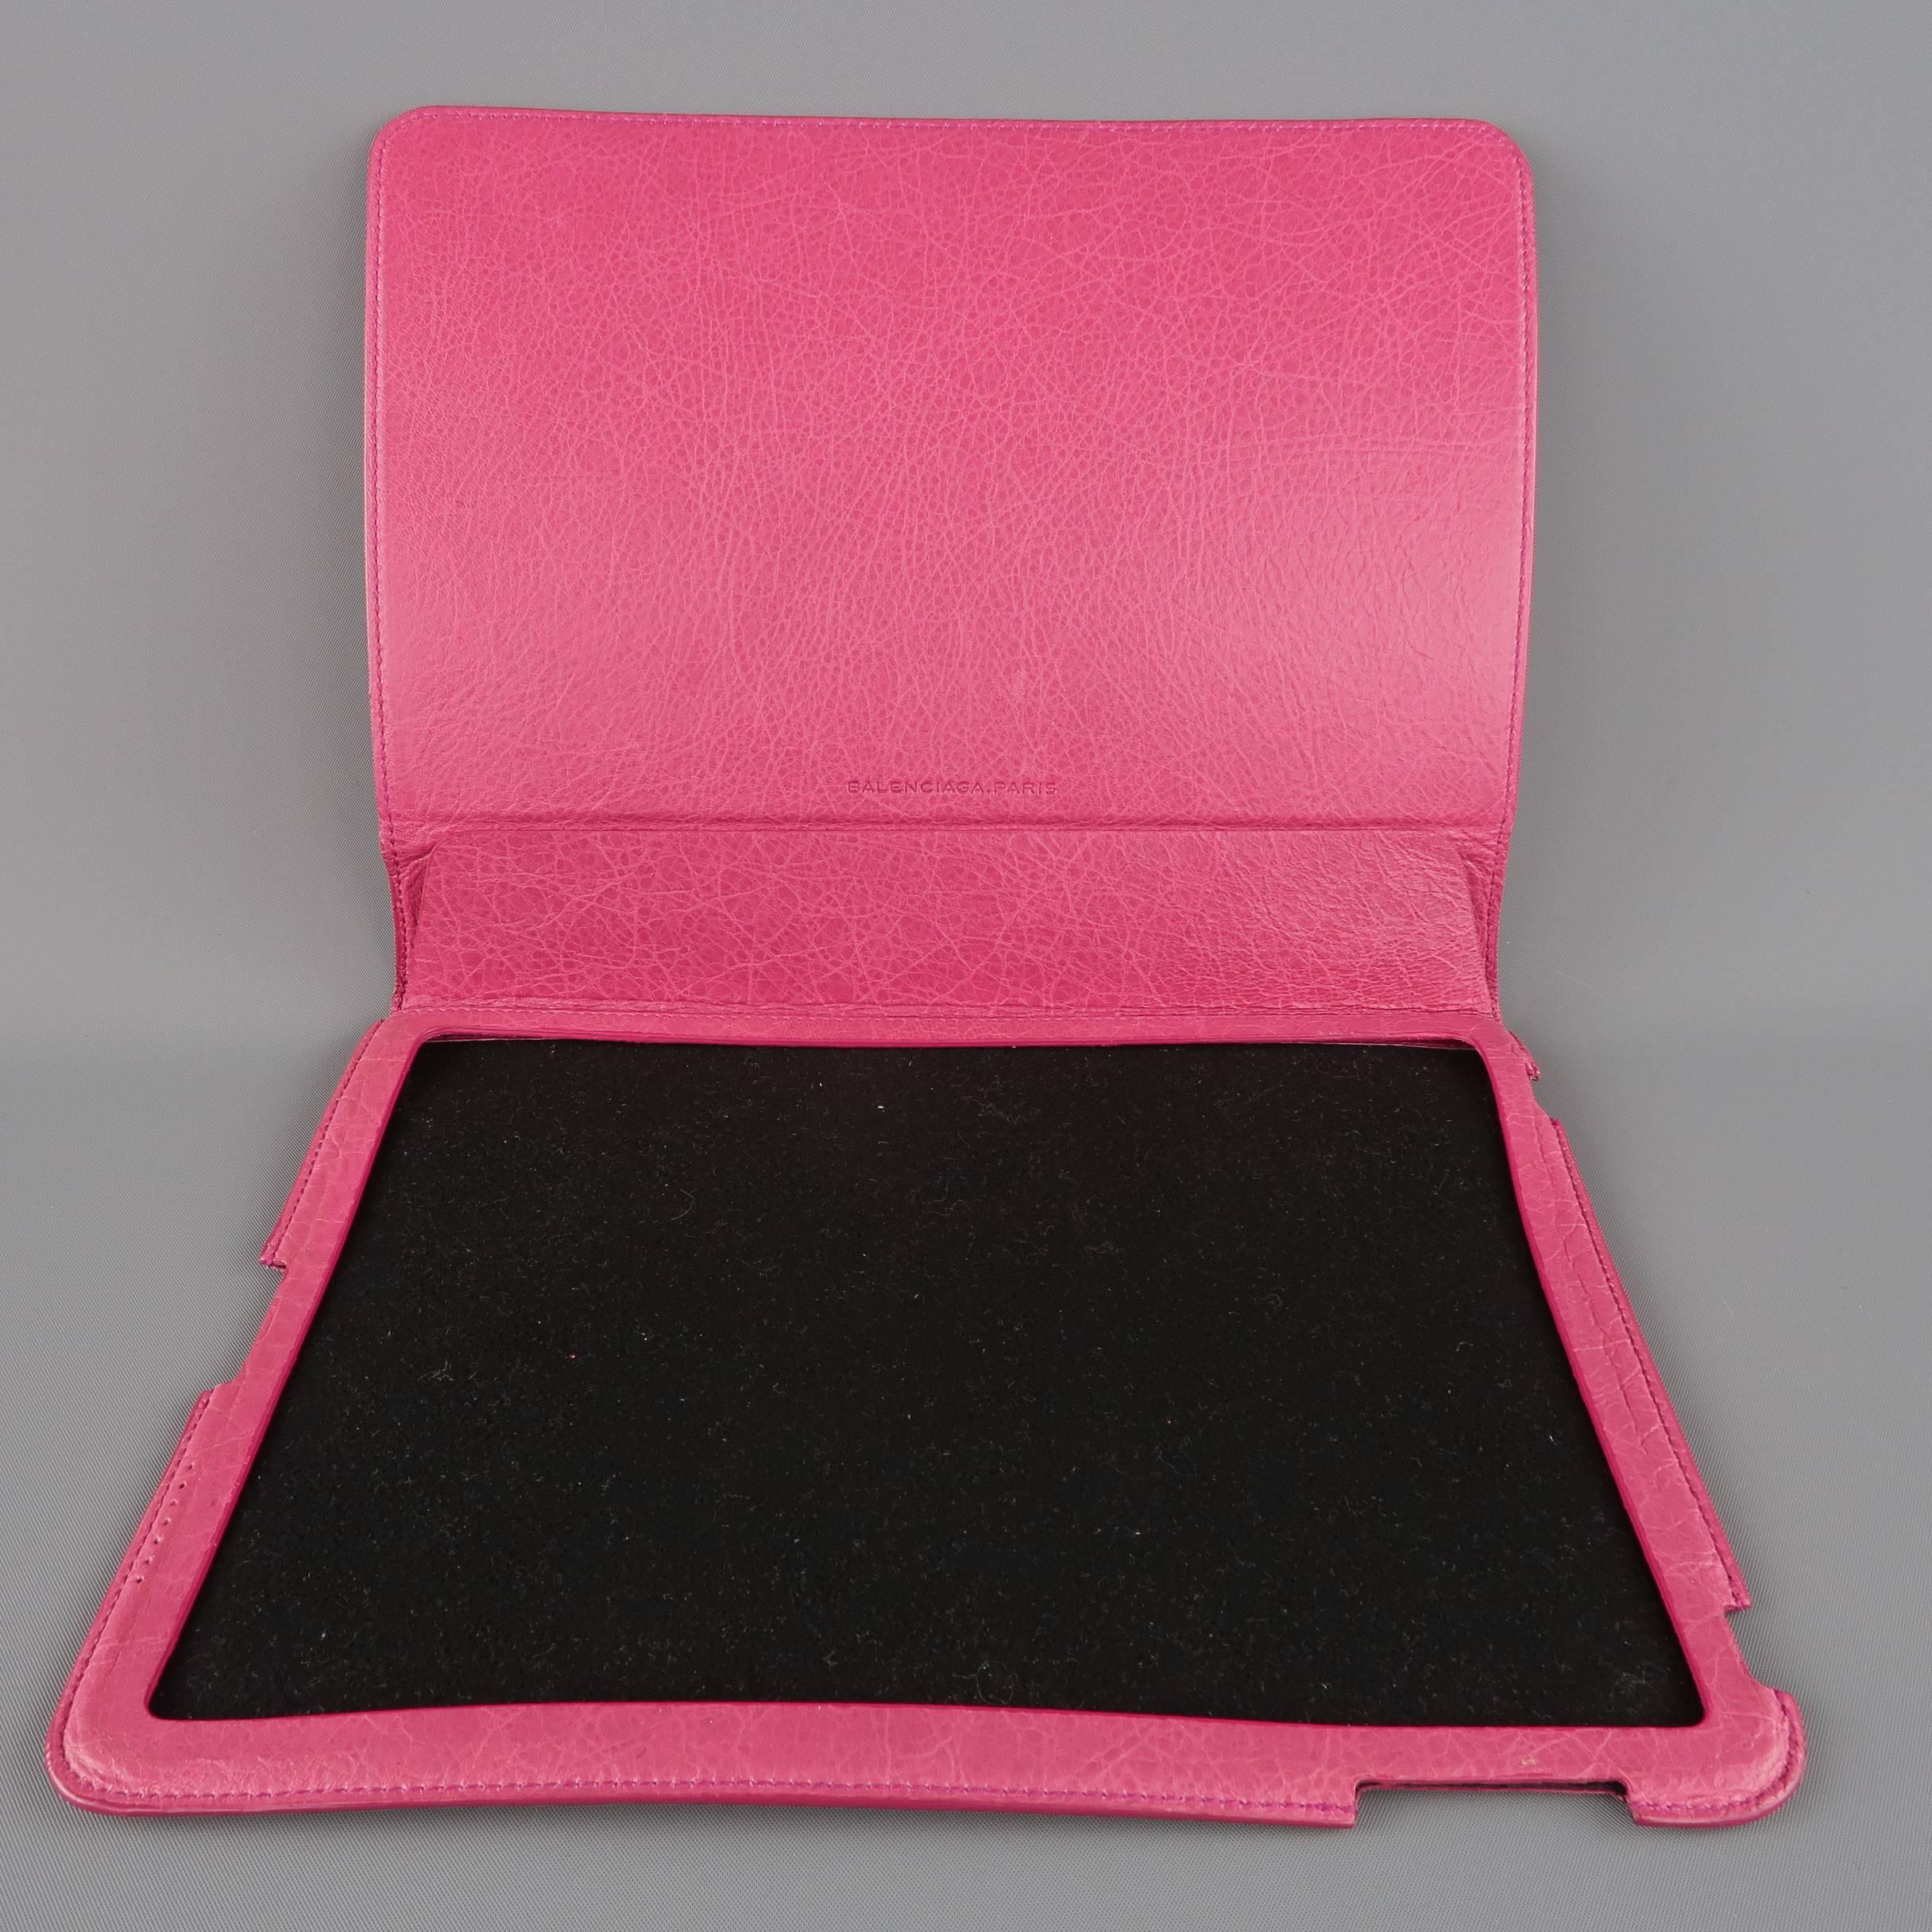 BALENCIAGA Dark Fuchsia Pink Textured Leather Moto Ipad 2 Stand Case 2